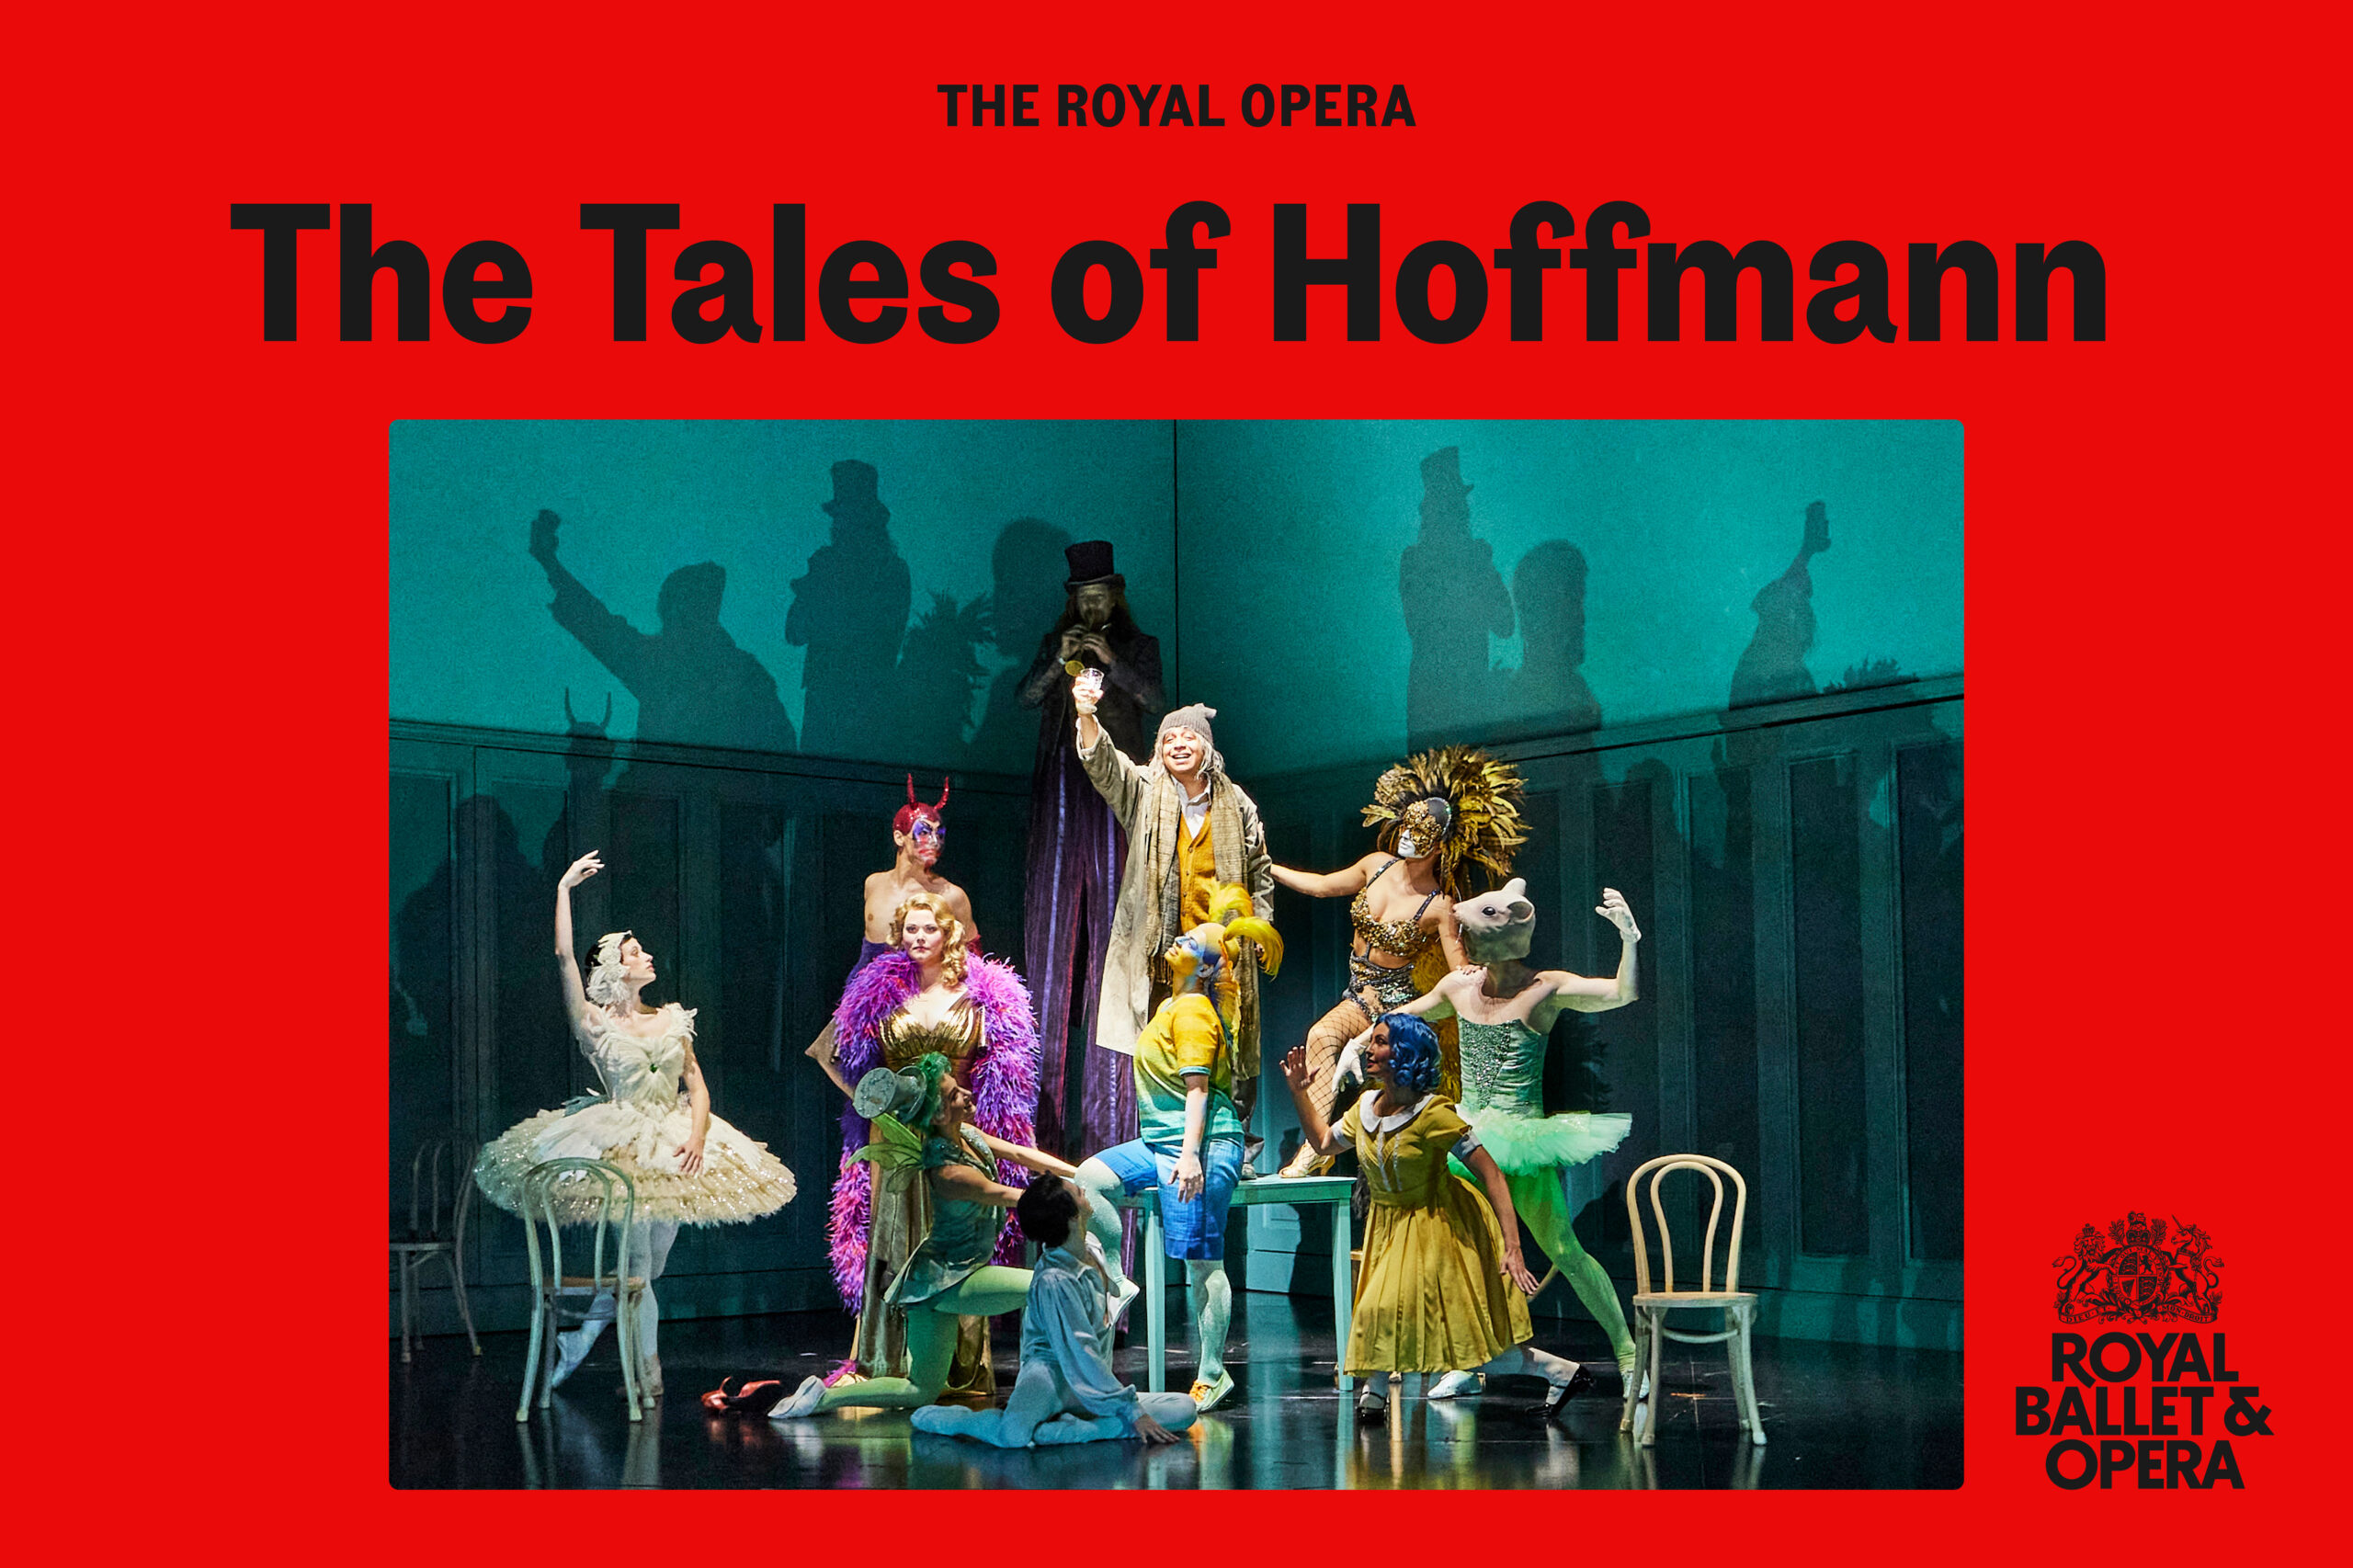 Royal Ballet & Opera: The Tales of Hoffman